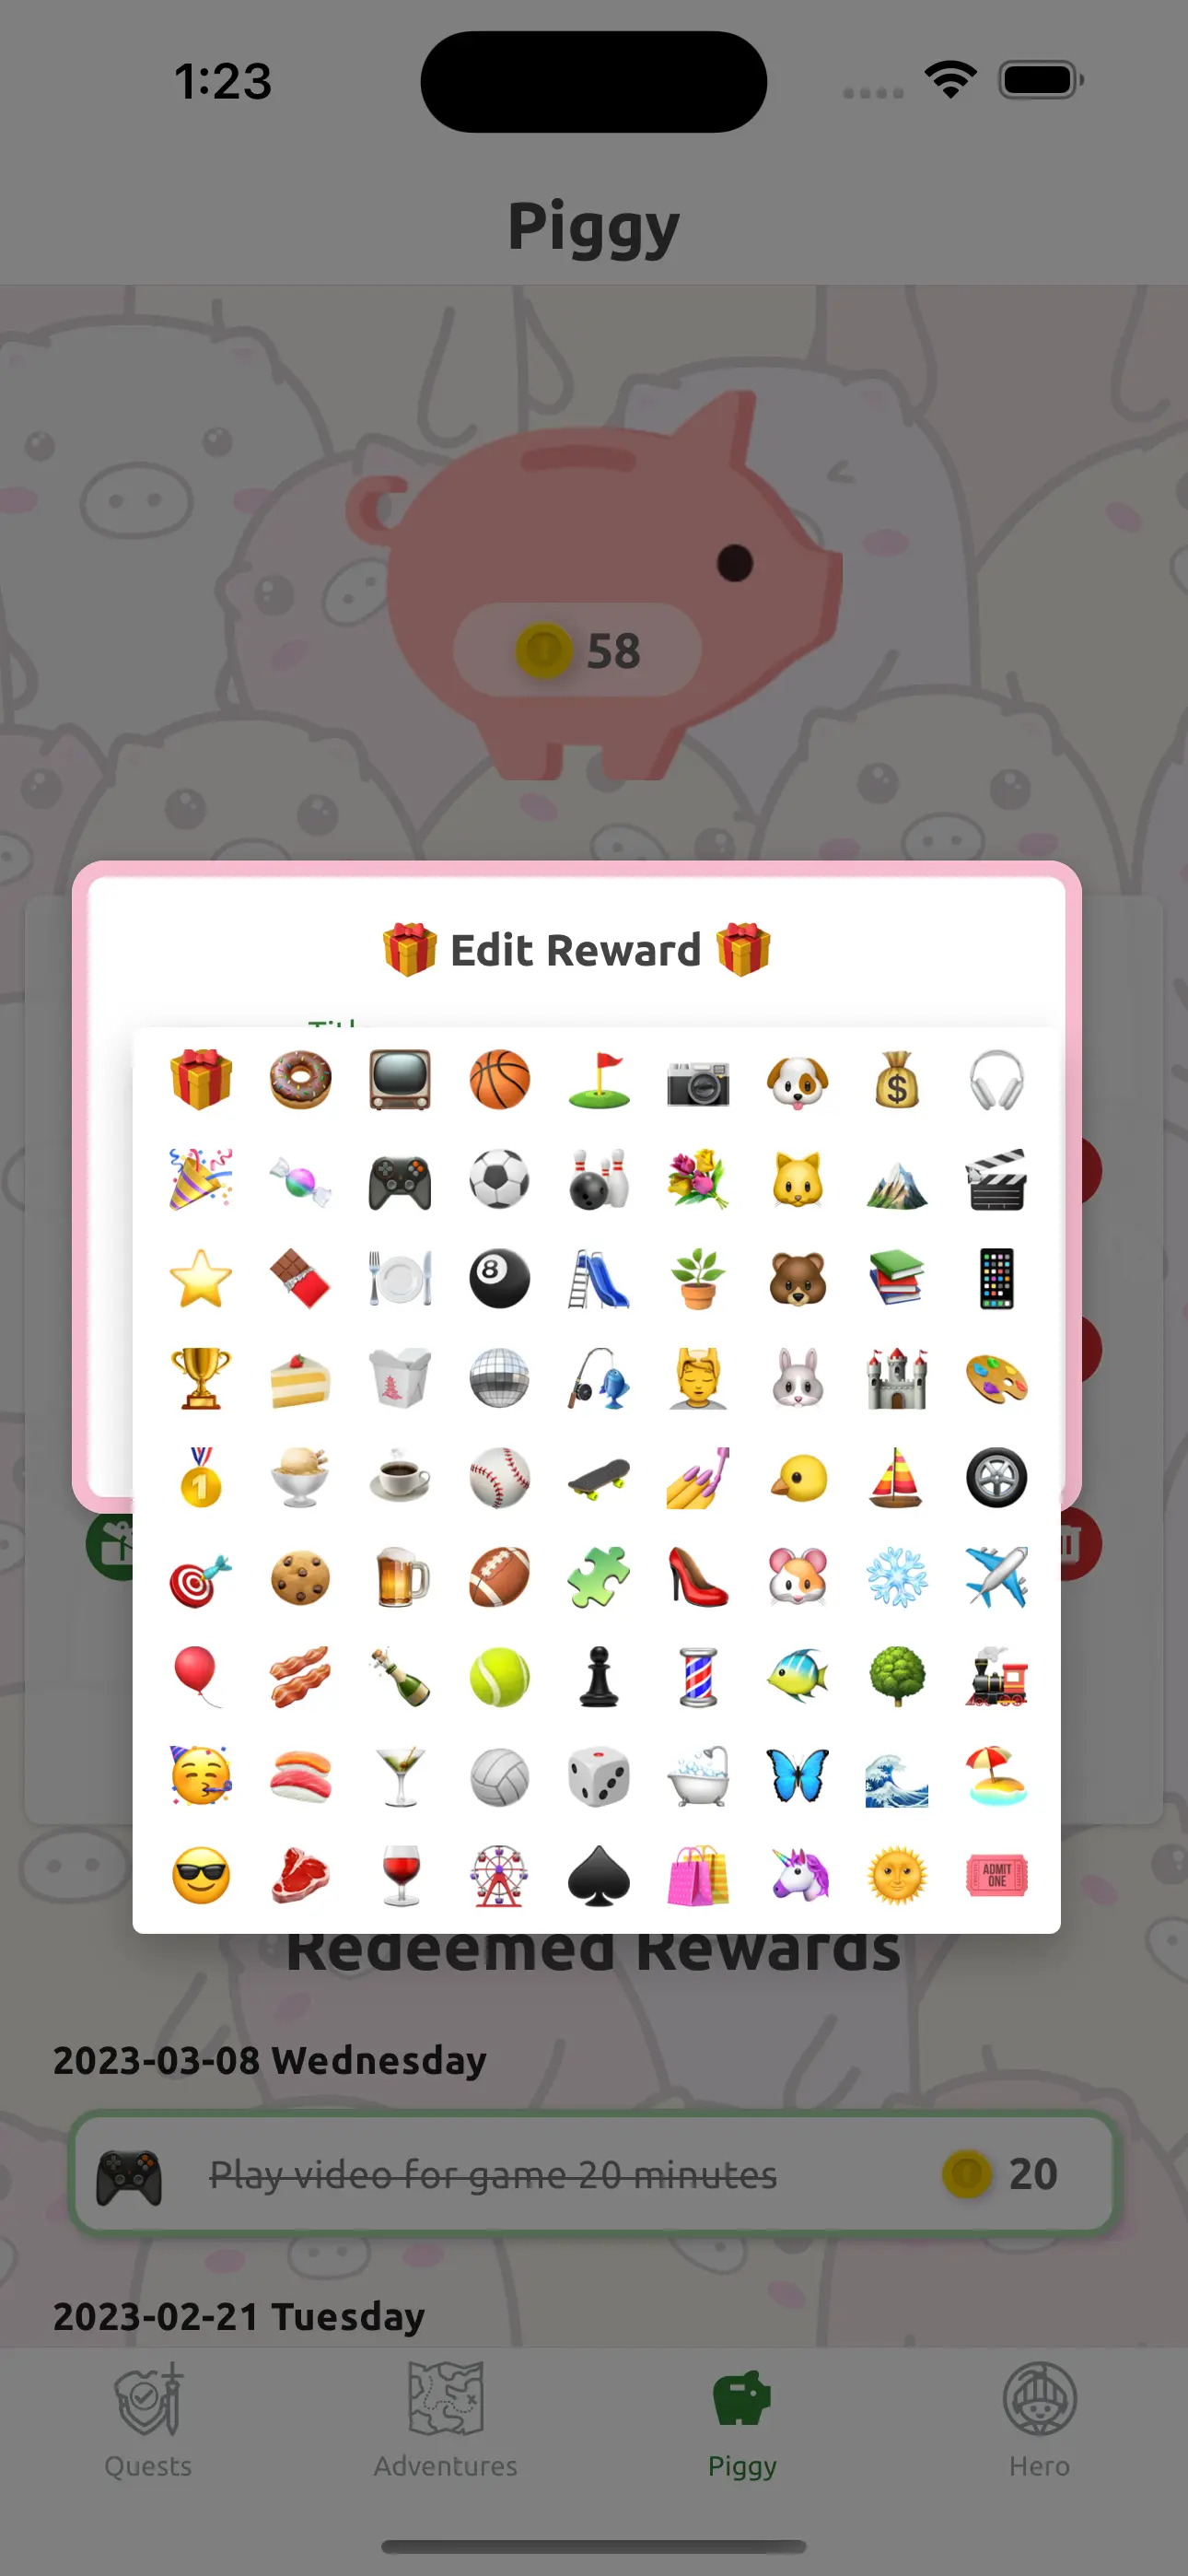 Picking an emoji to represent your reward